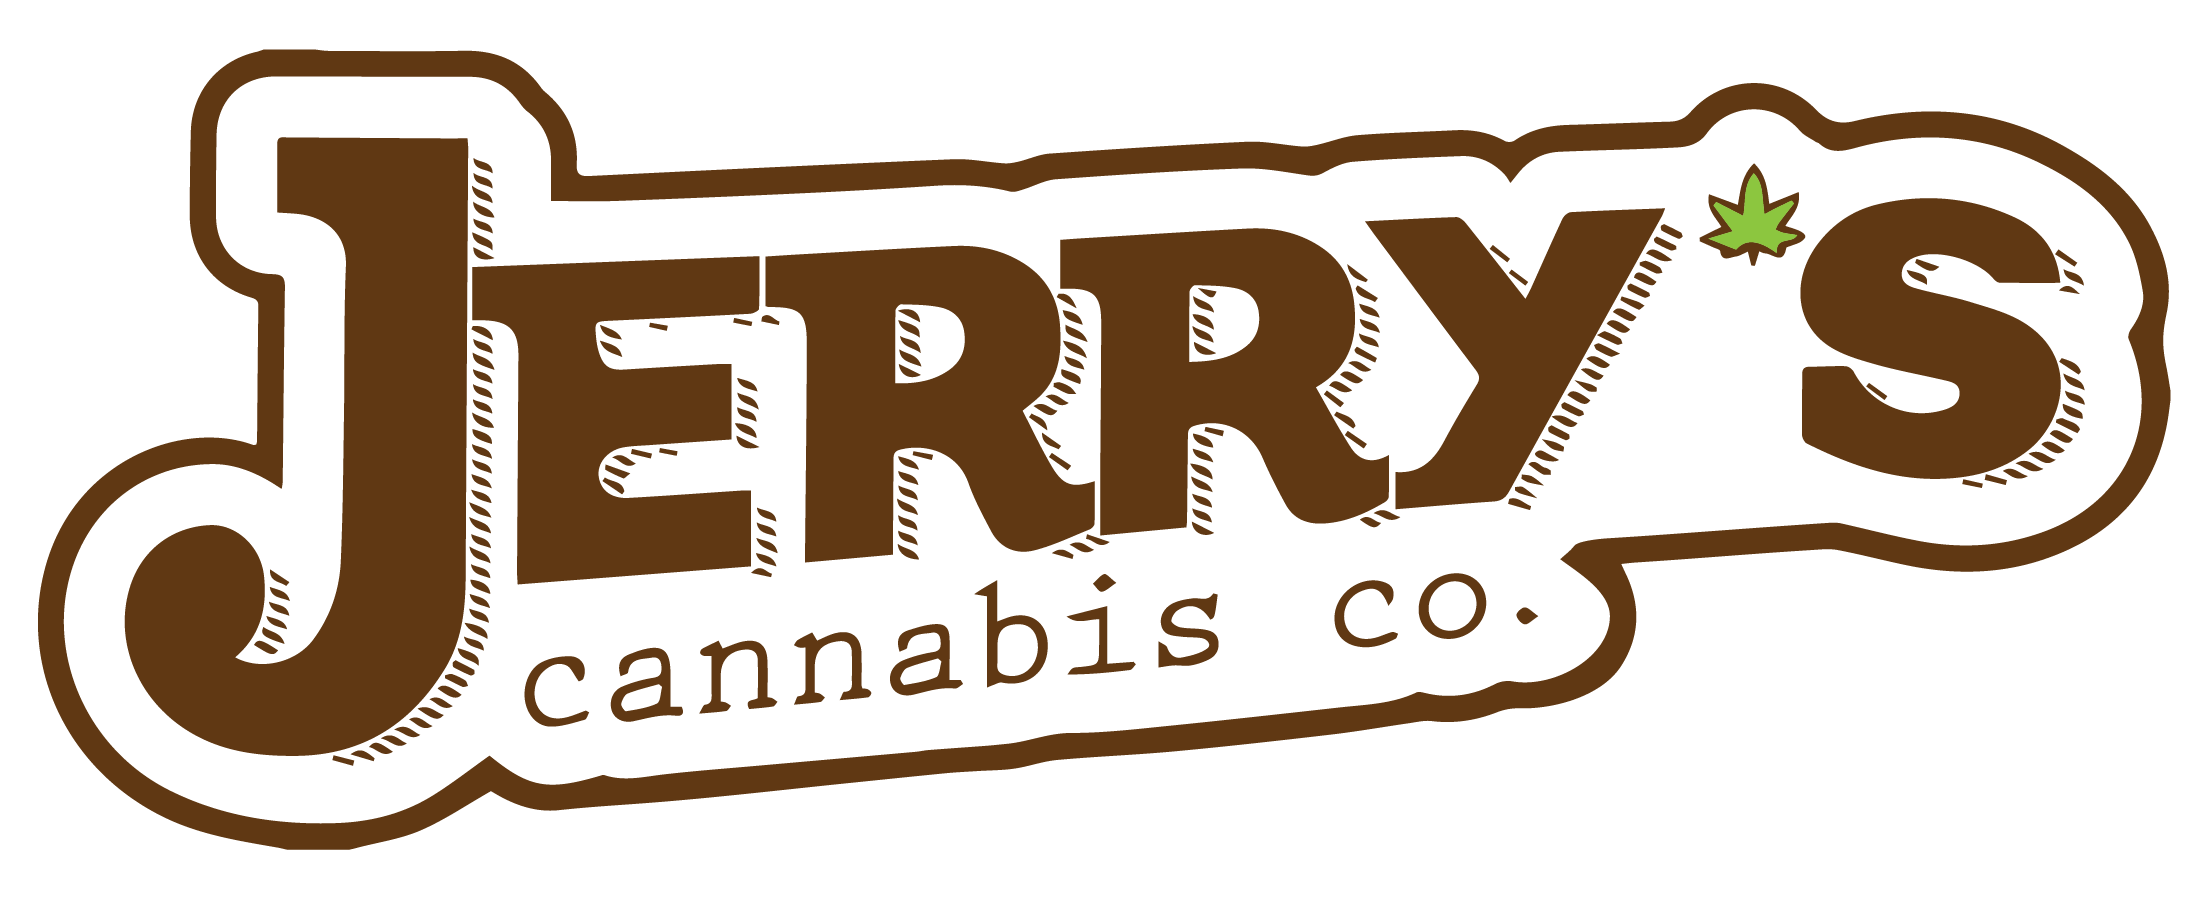 Jerry's Cannabis